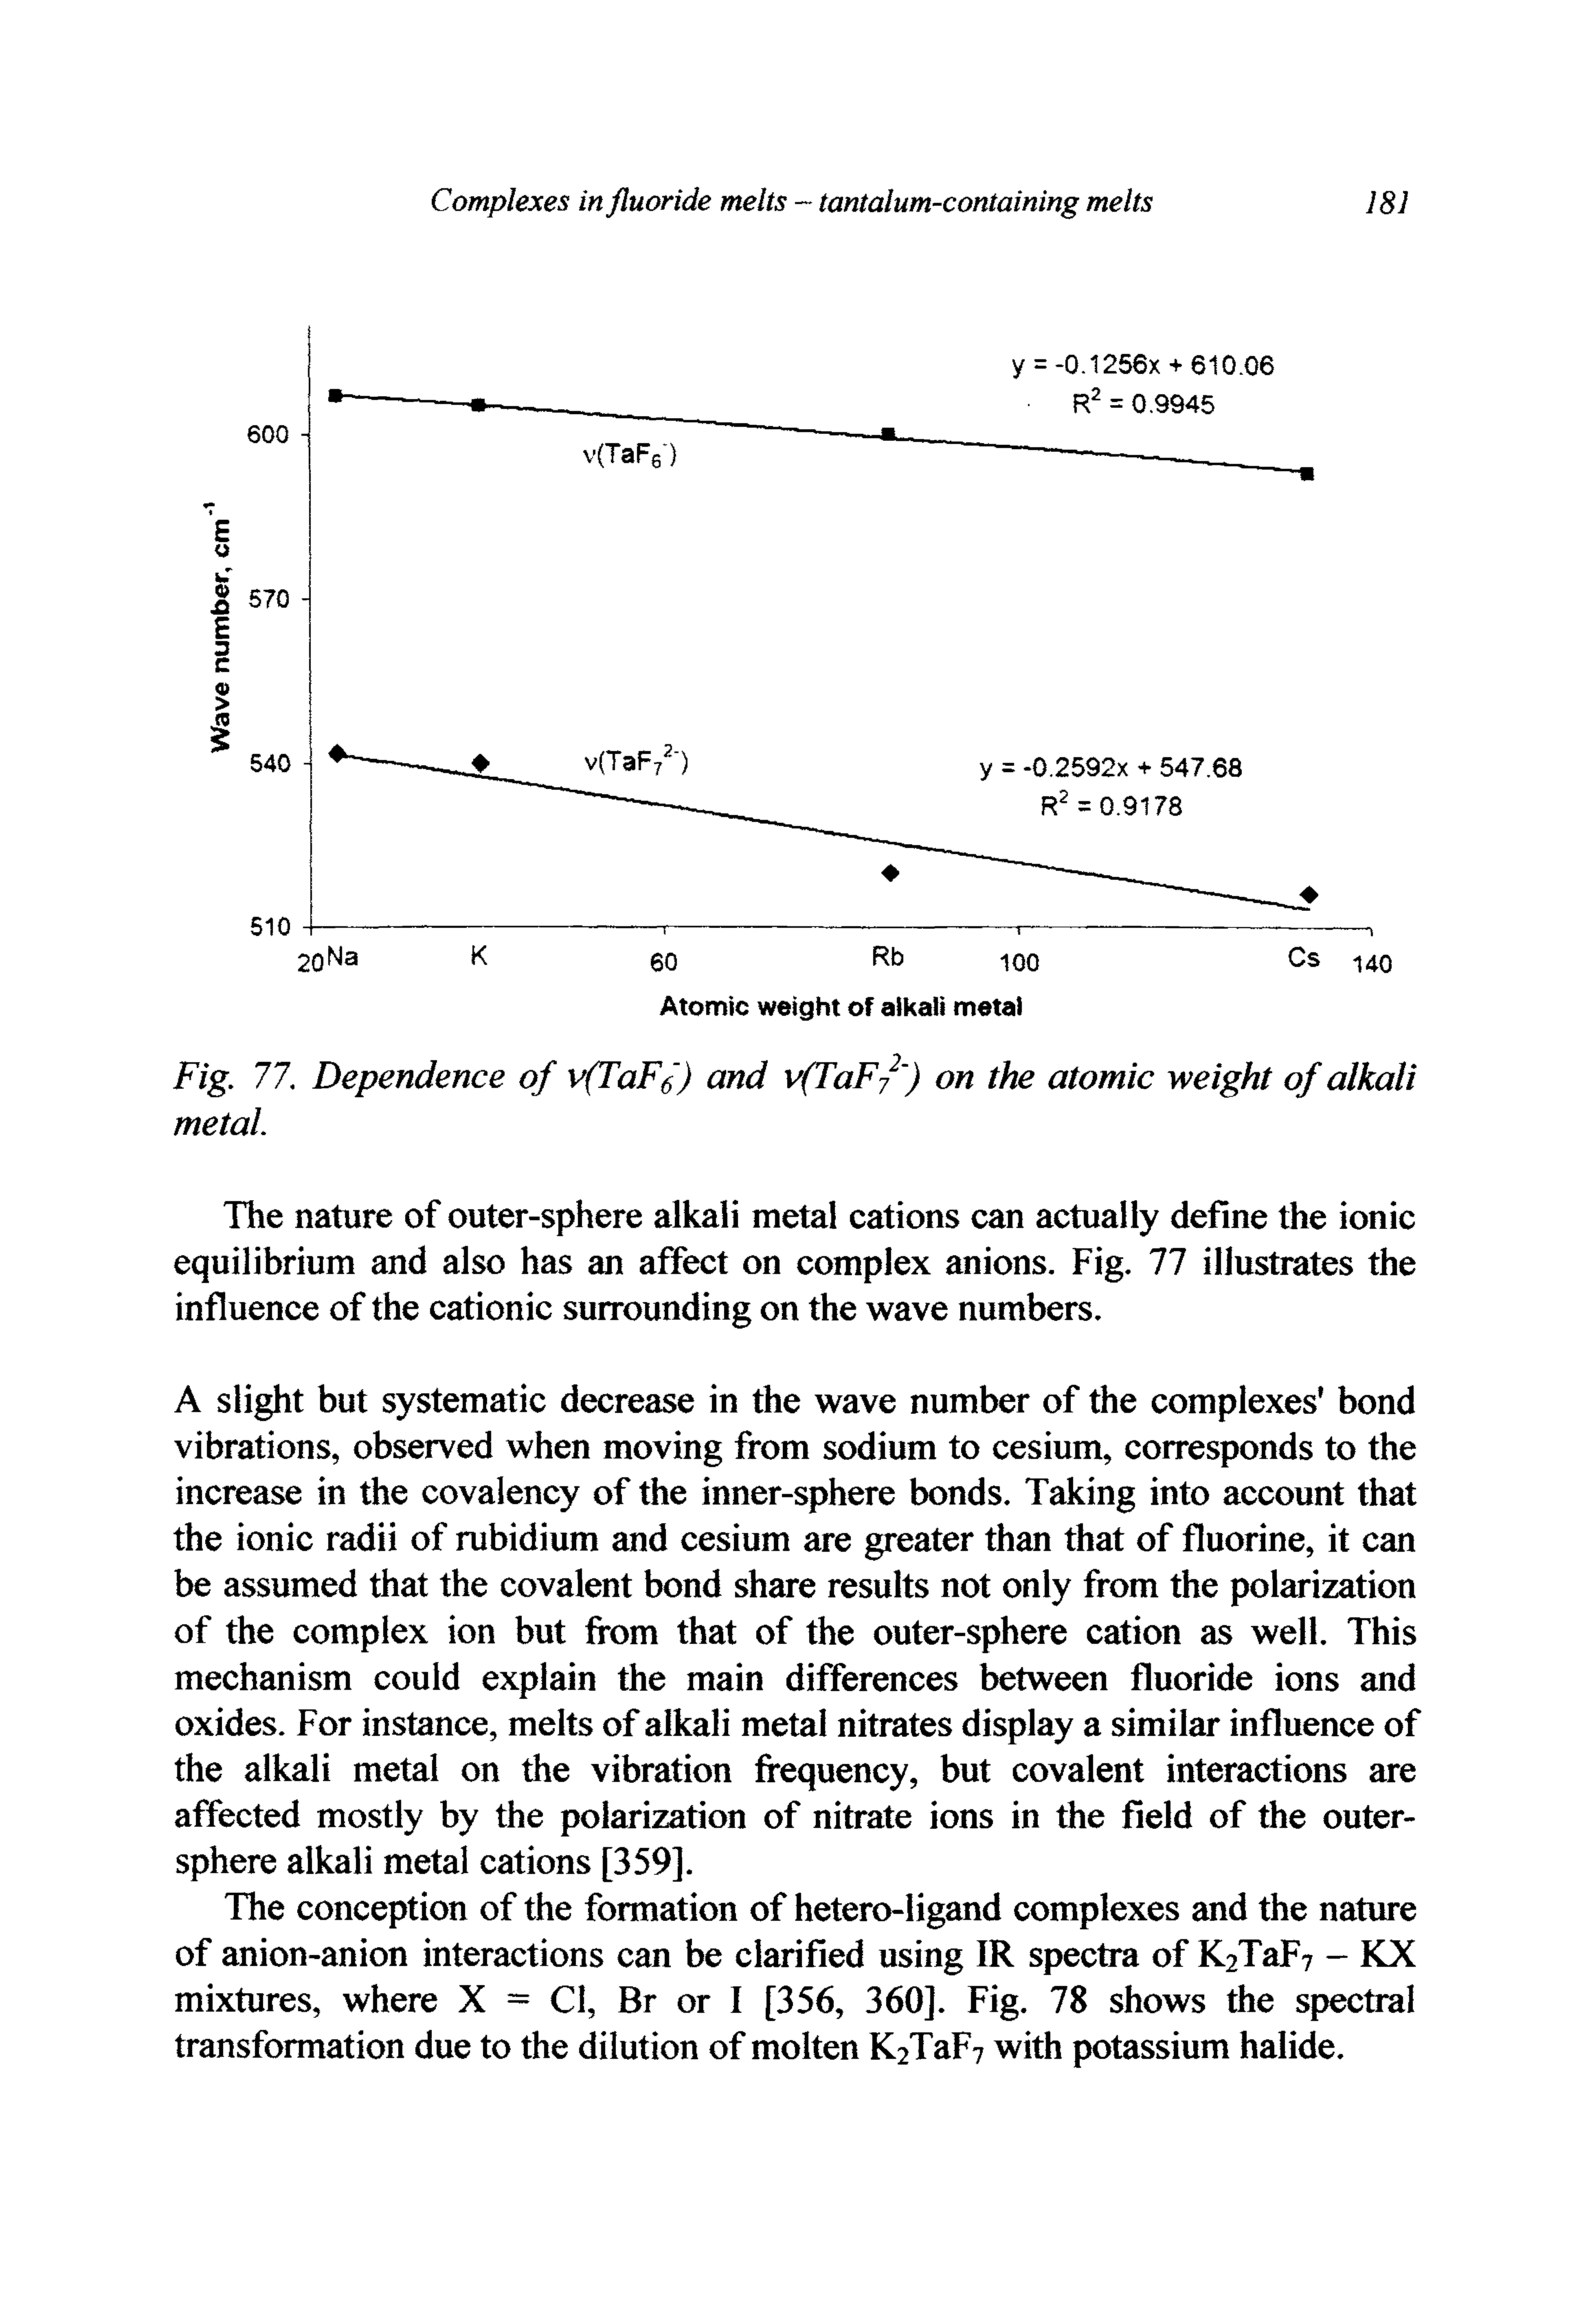 Fig. 77. Dependence of v(TaFg) and v(TaF72 ) on the atomic weight of alkali metal.